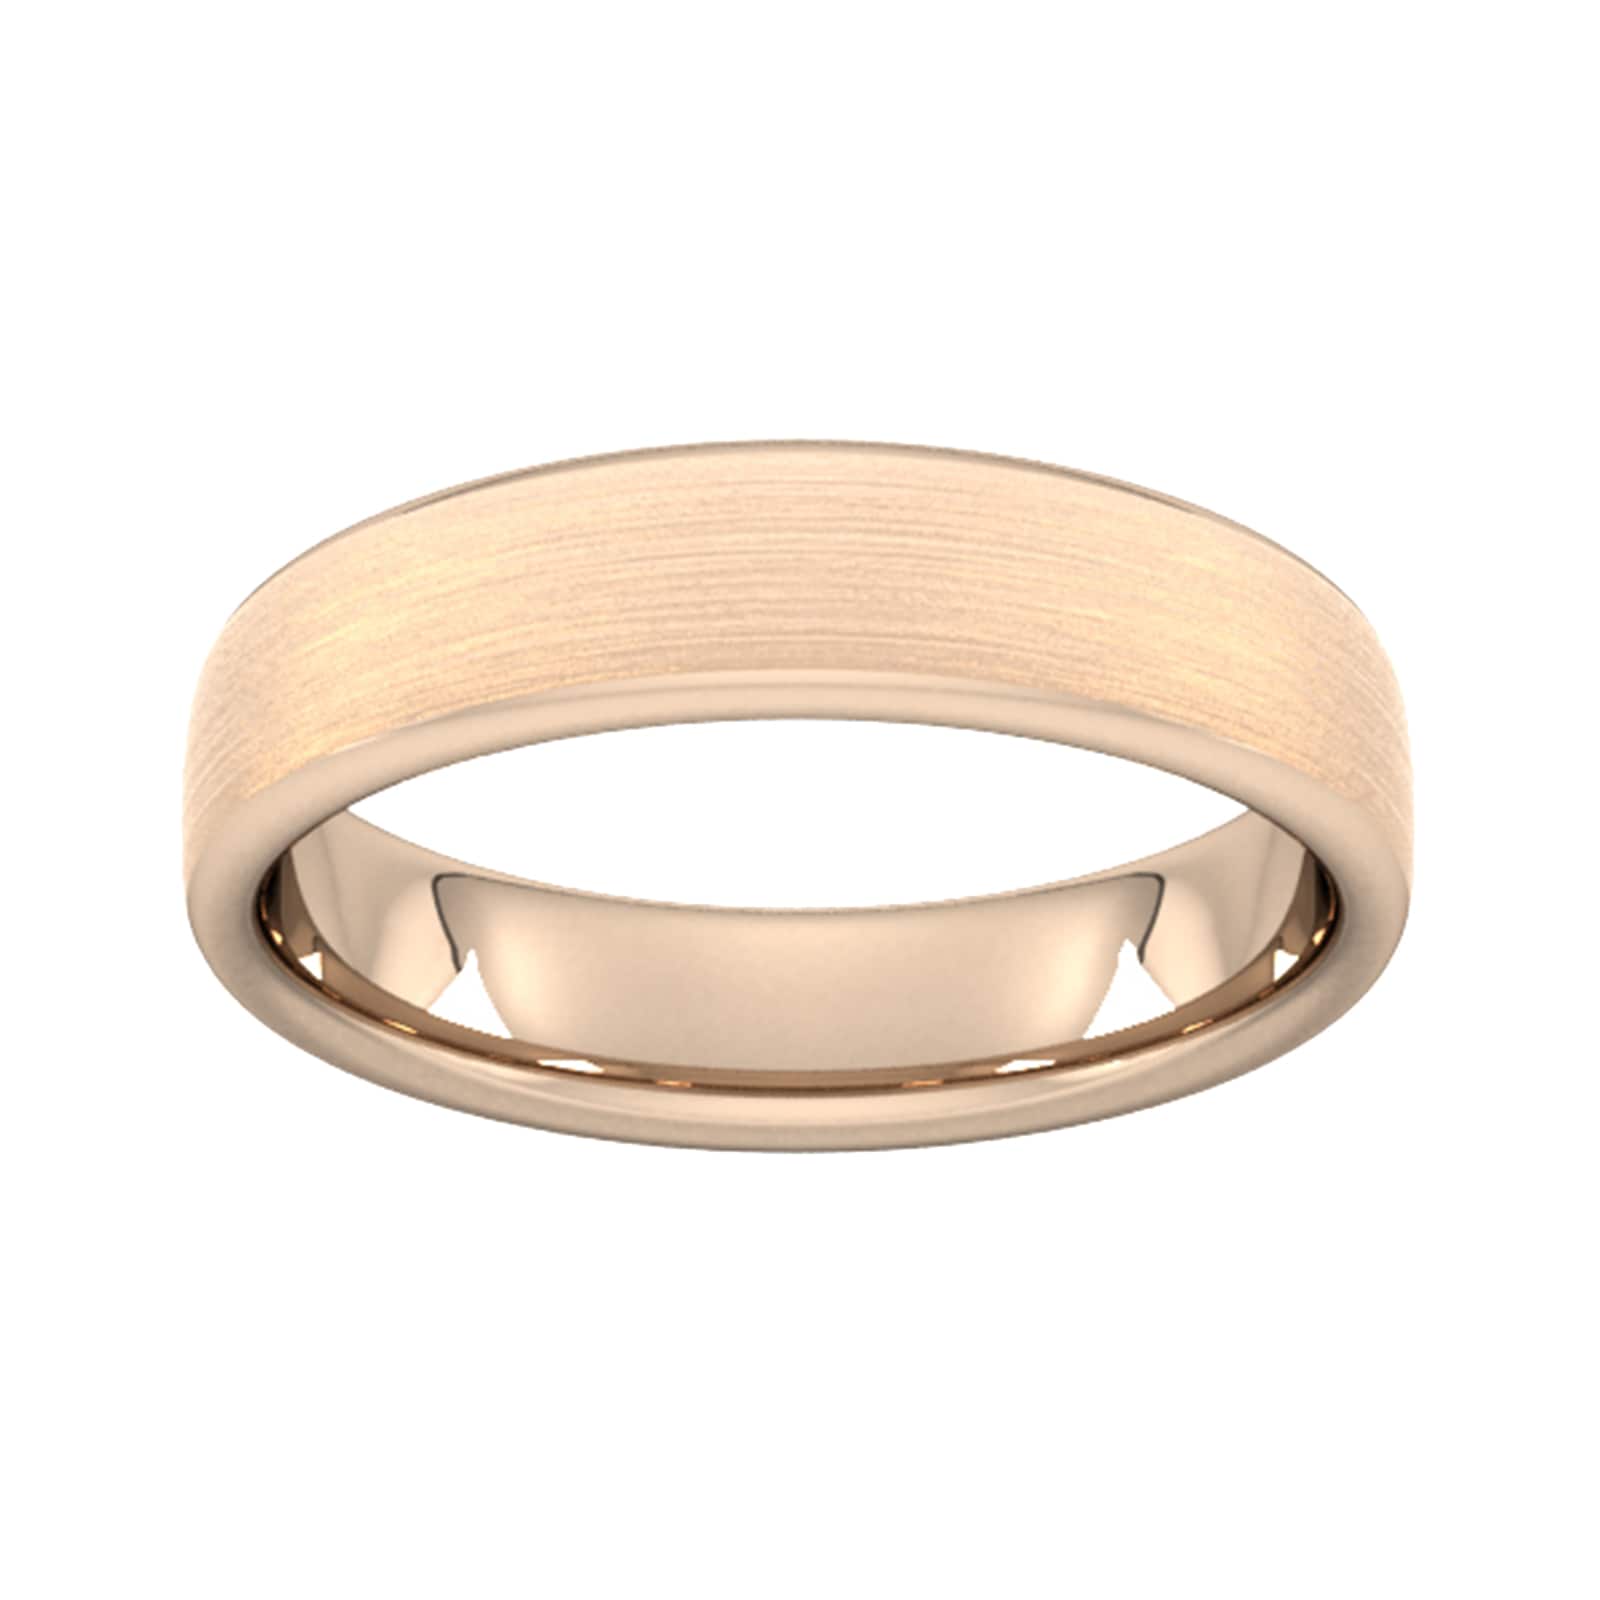 5mm Slight Court Standard Matt Finished Wedding Ring In 18 Carat Rose Gold - Ring Size U